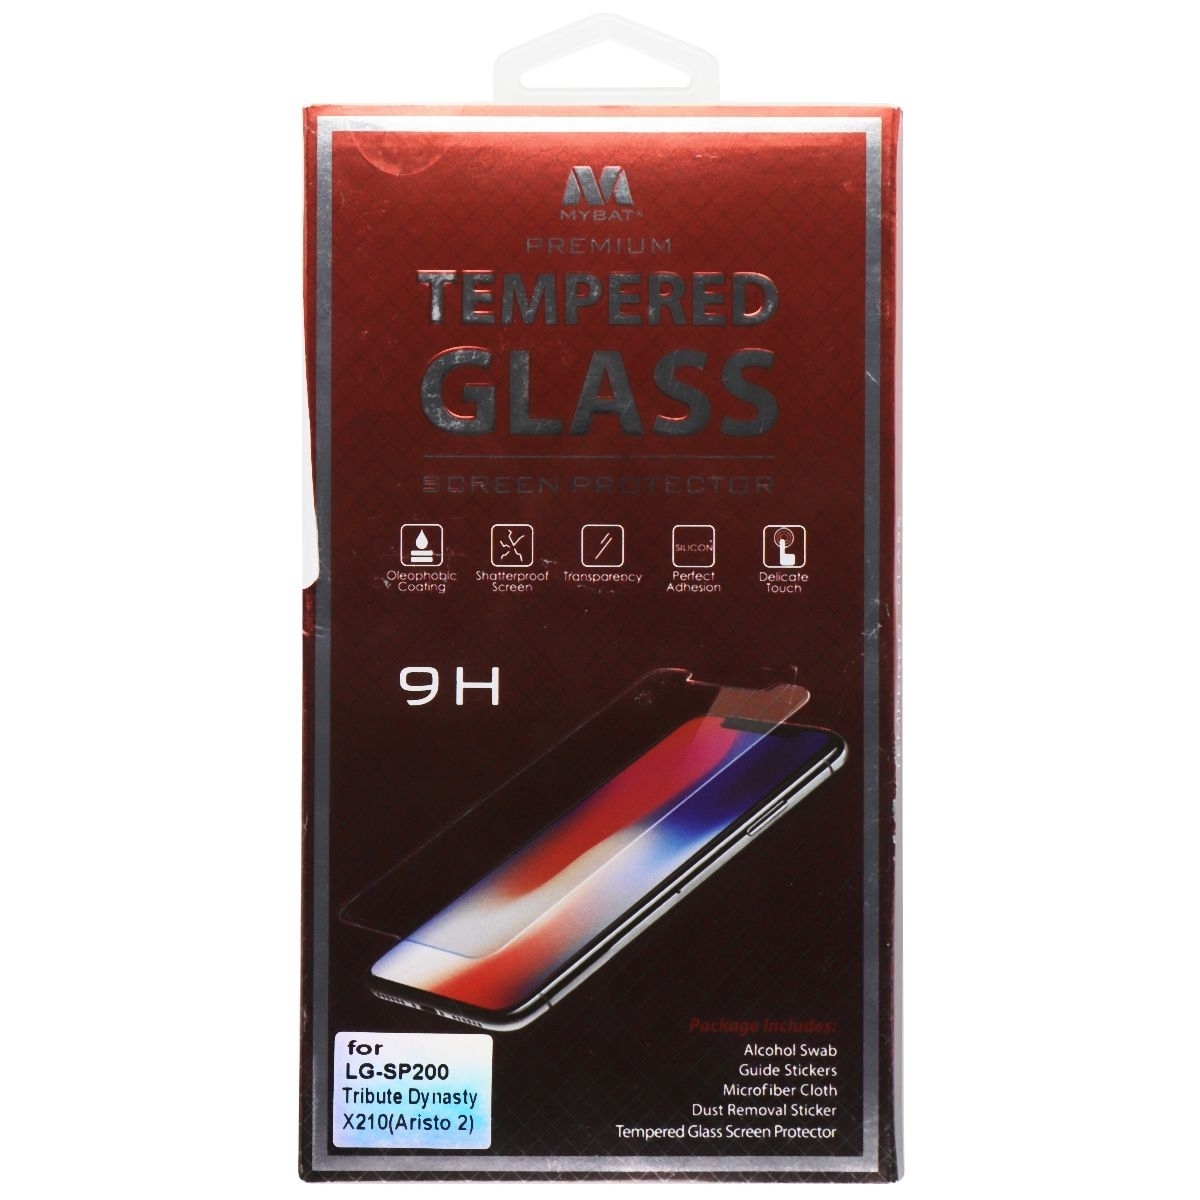 MYBAT Premium Tempered Glass For LG-SP200 / Tribute Dynasty / X210 (Aristo 2) (Refurbished)